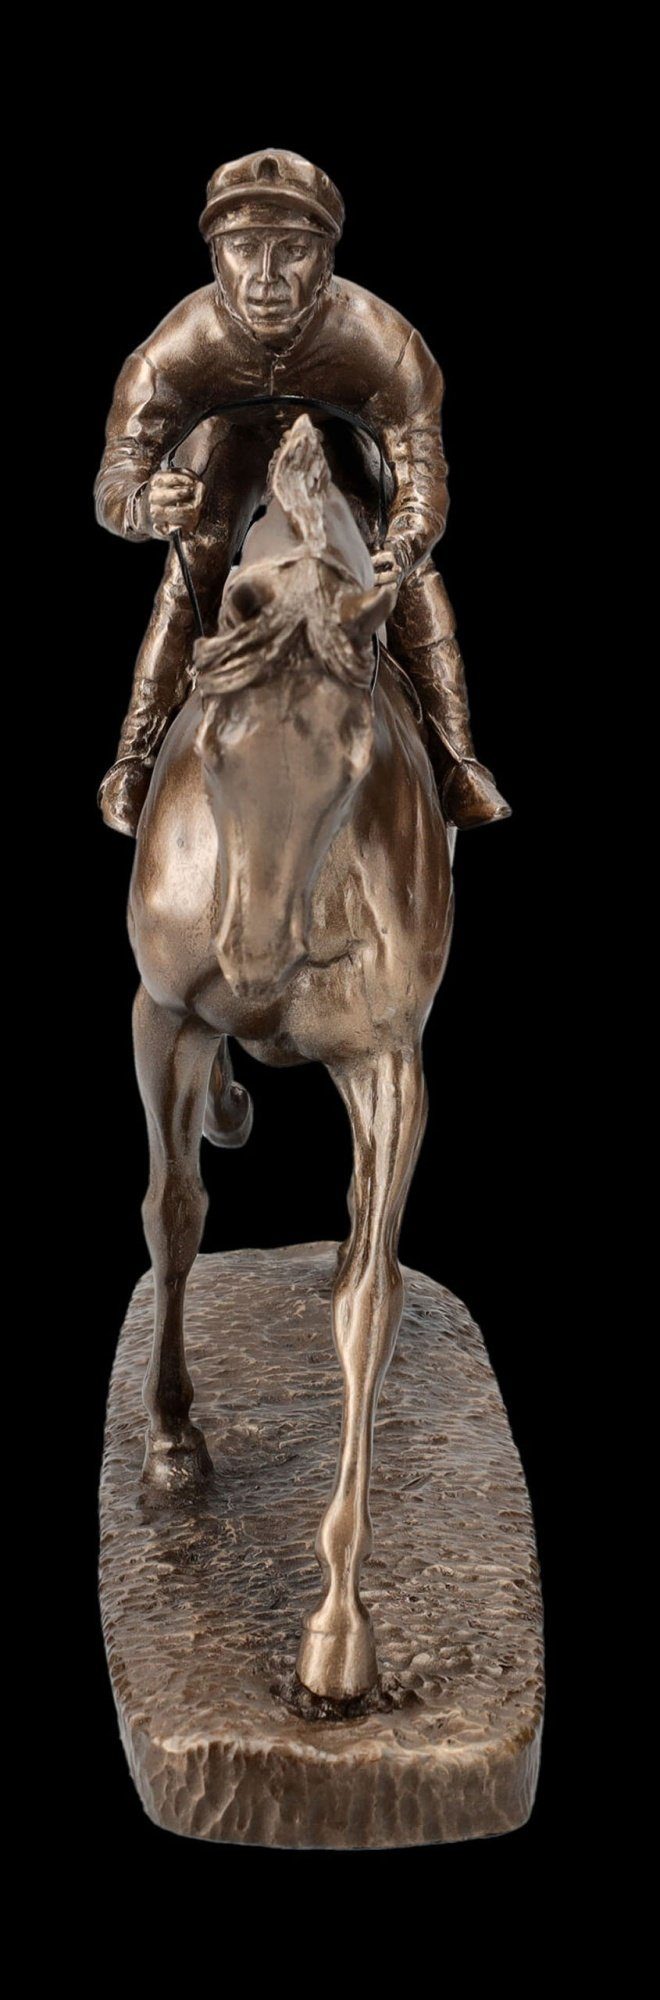 Favourite The Jockey Dekofigur Figur - Pferd Shop Reiter auf Figuren Tierfigur GmbH - - Dekofigur